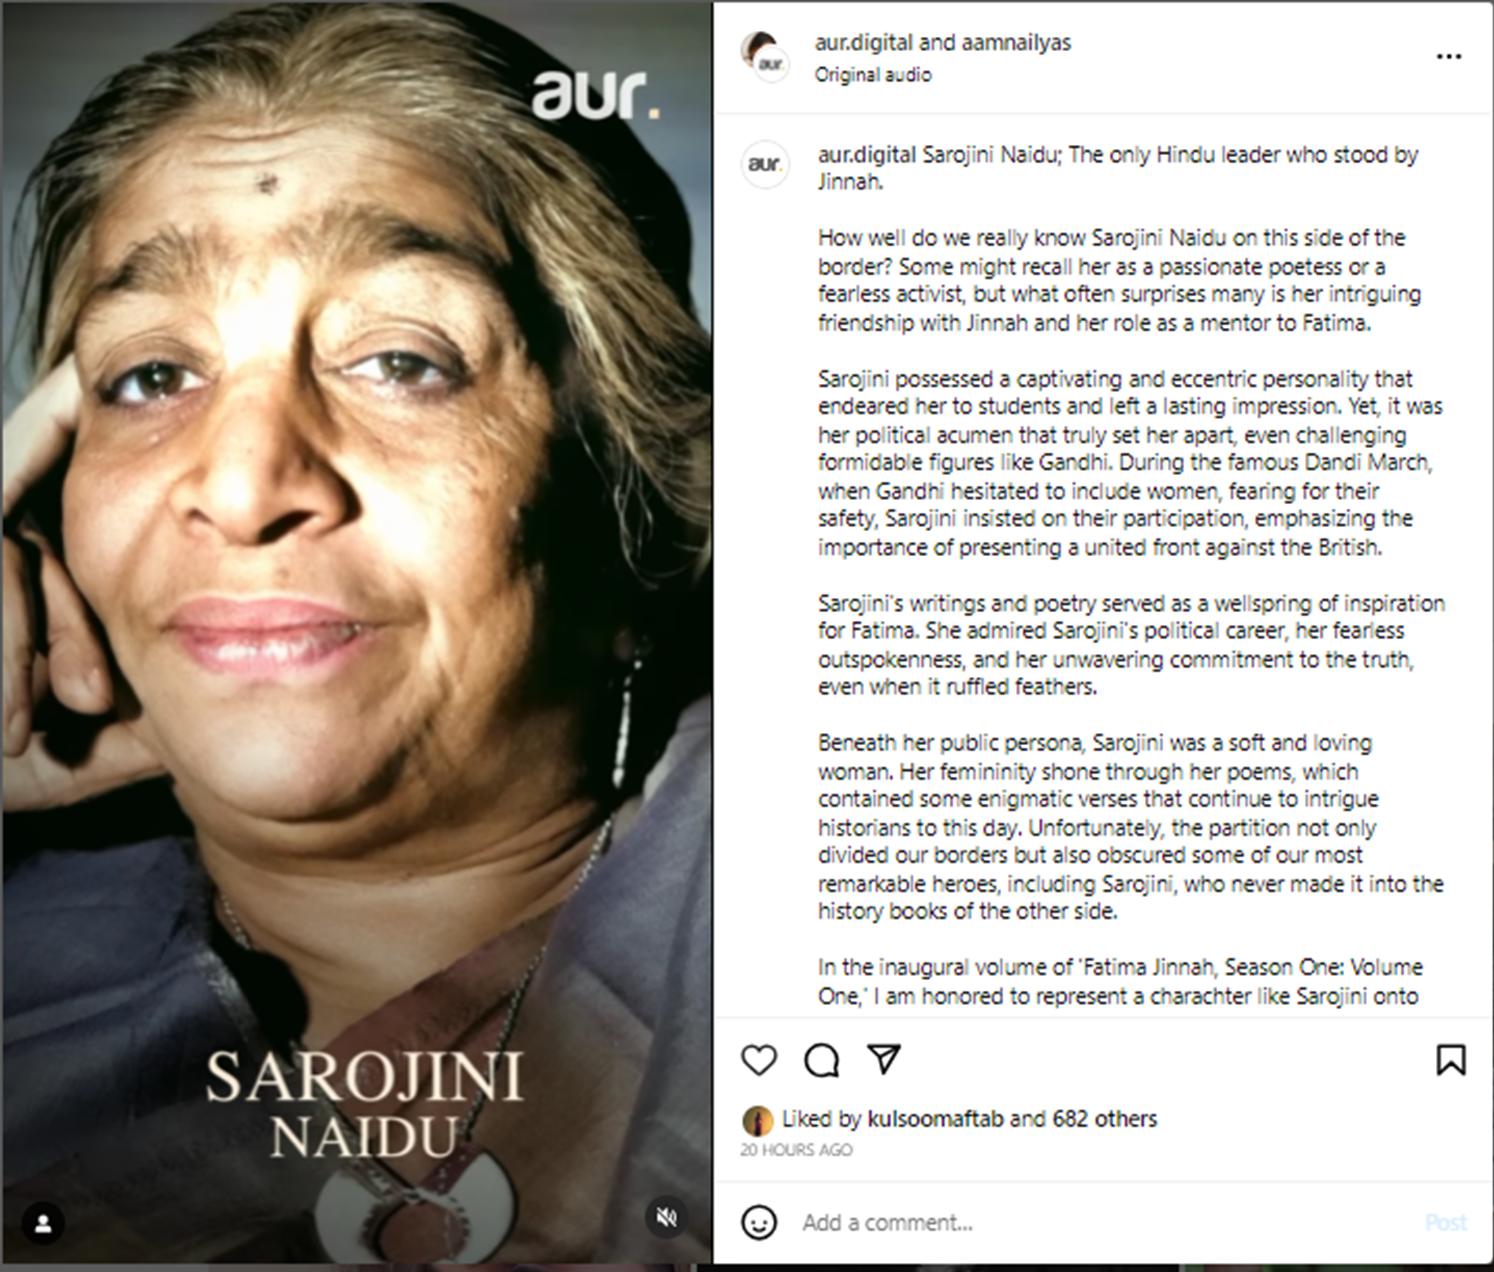 Amna to portray Sarojini Naidu in aur.digital series